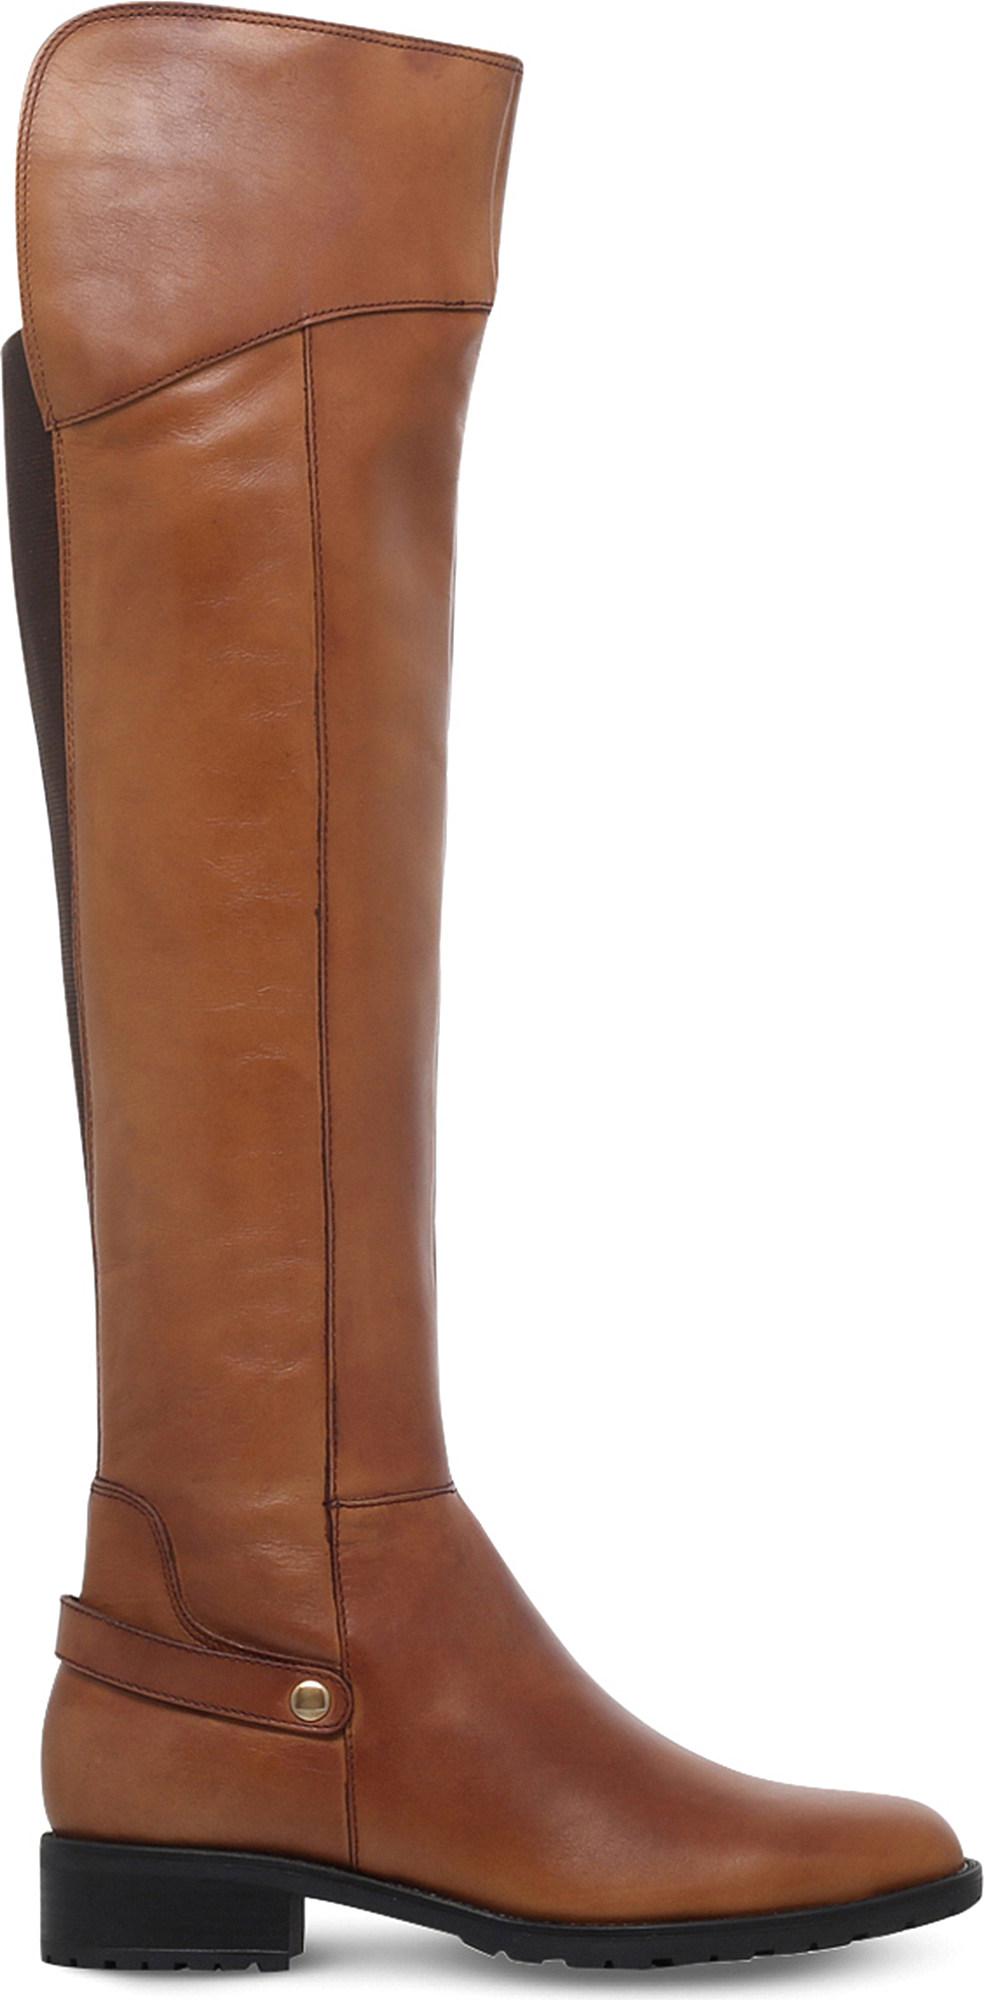 Carvela Kurt Geiger Vivian Leather Knee-High Boots in Brown - Lyst